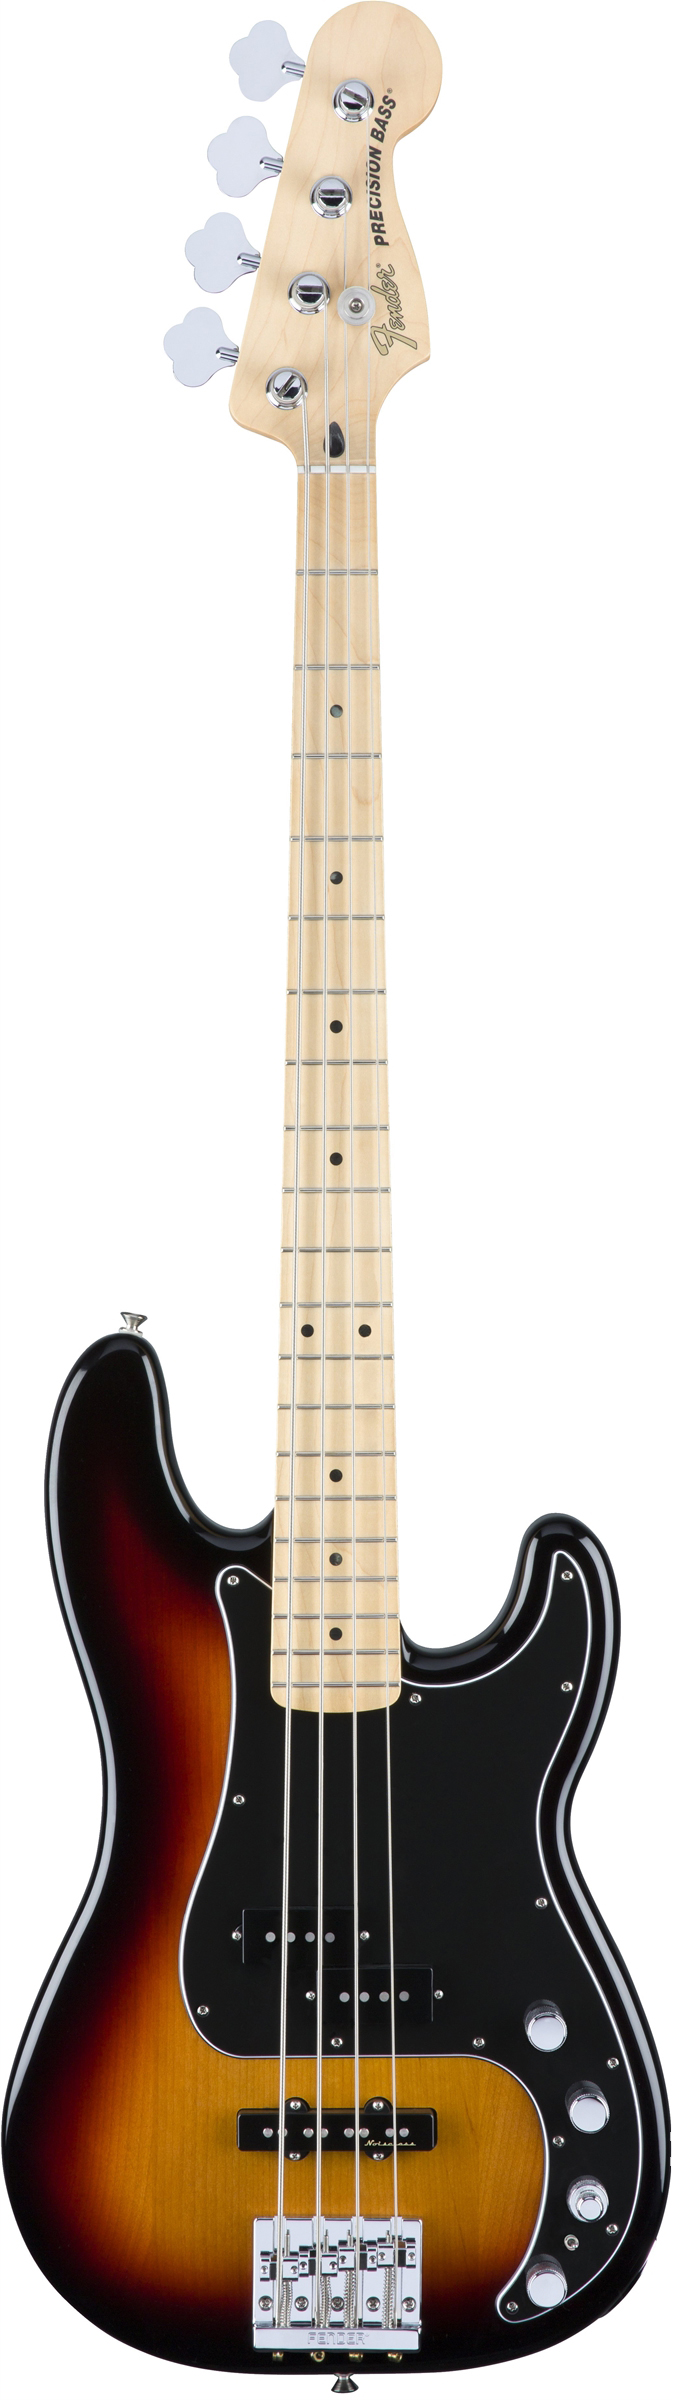 Fender Precision Bass Deluxe Special - 3 Colors Sunburst